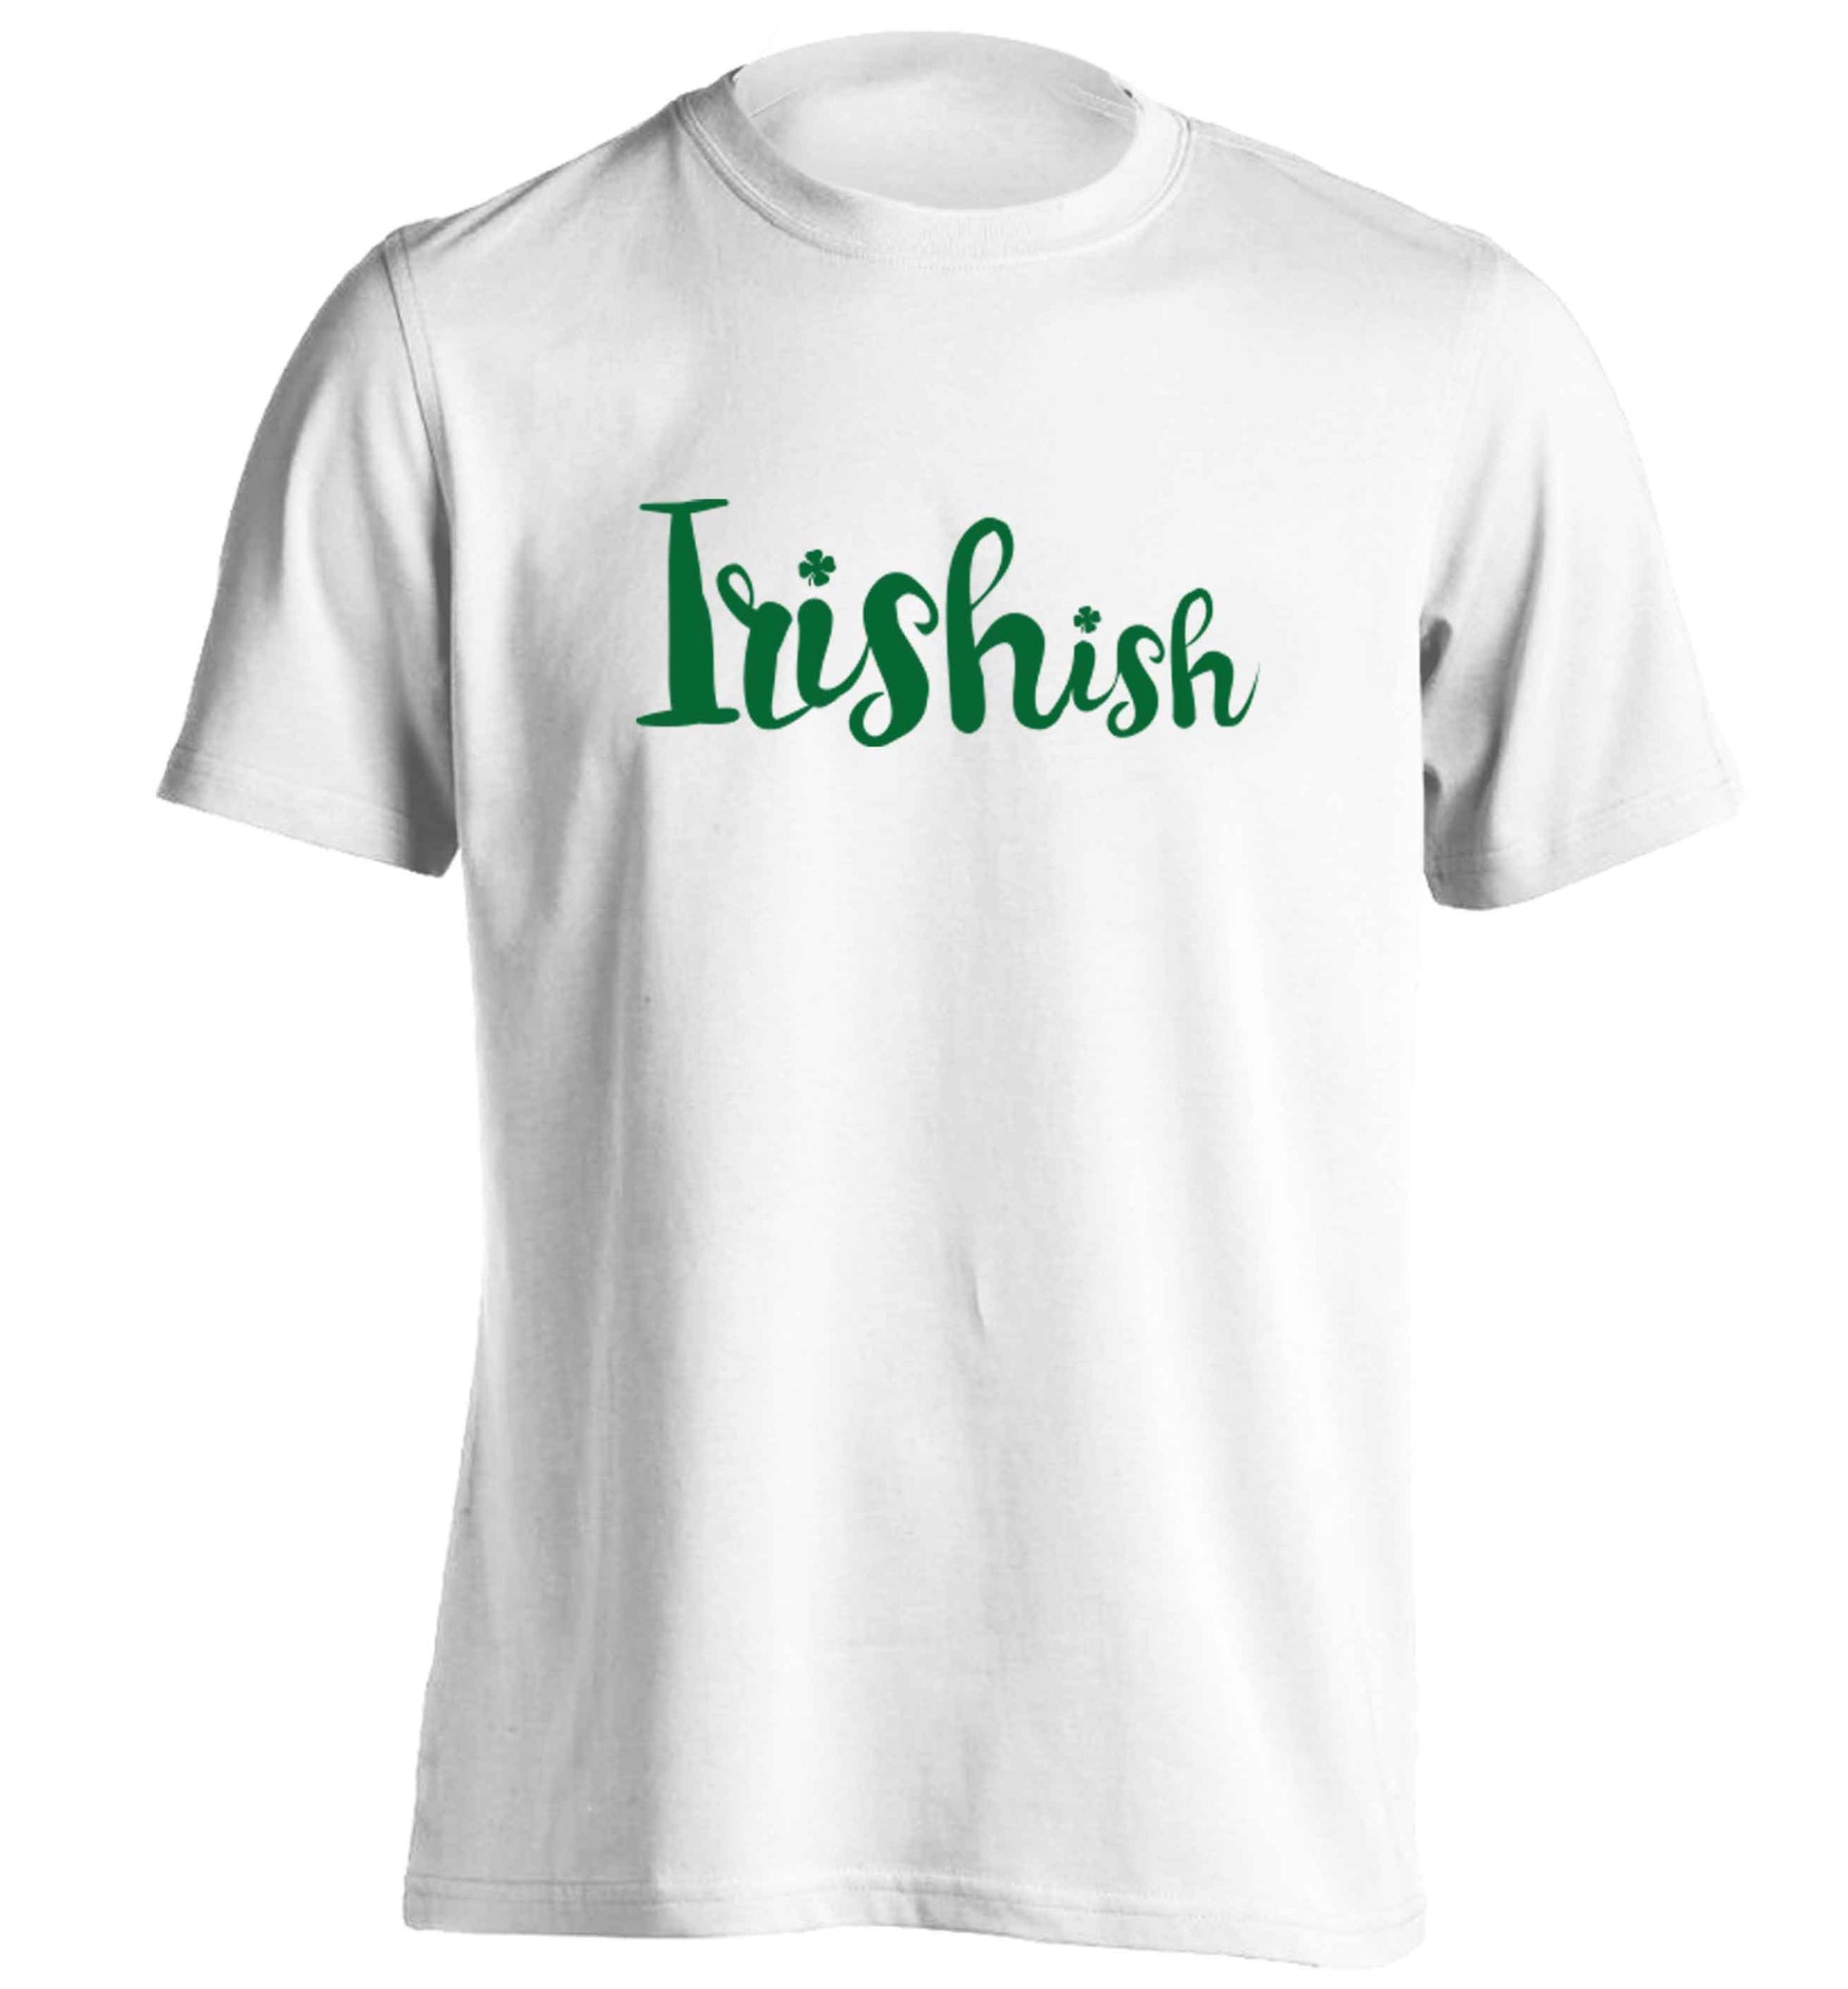 Irishish adults unisex white Tshirt 2XL